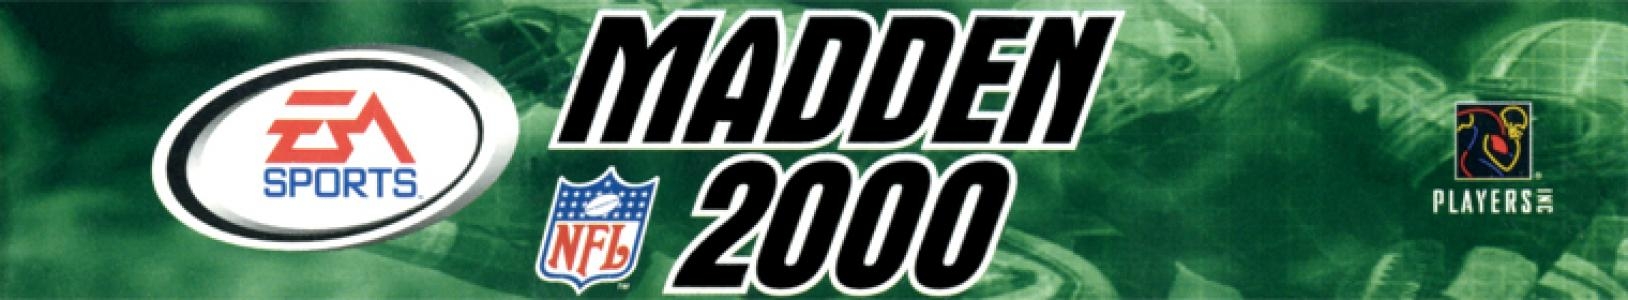 Madden NFL 2000 banner